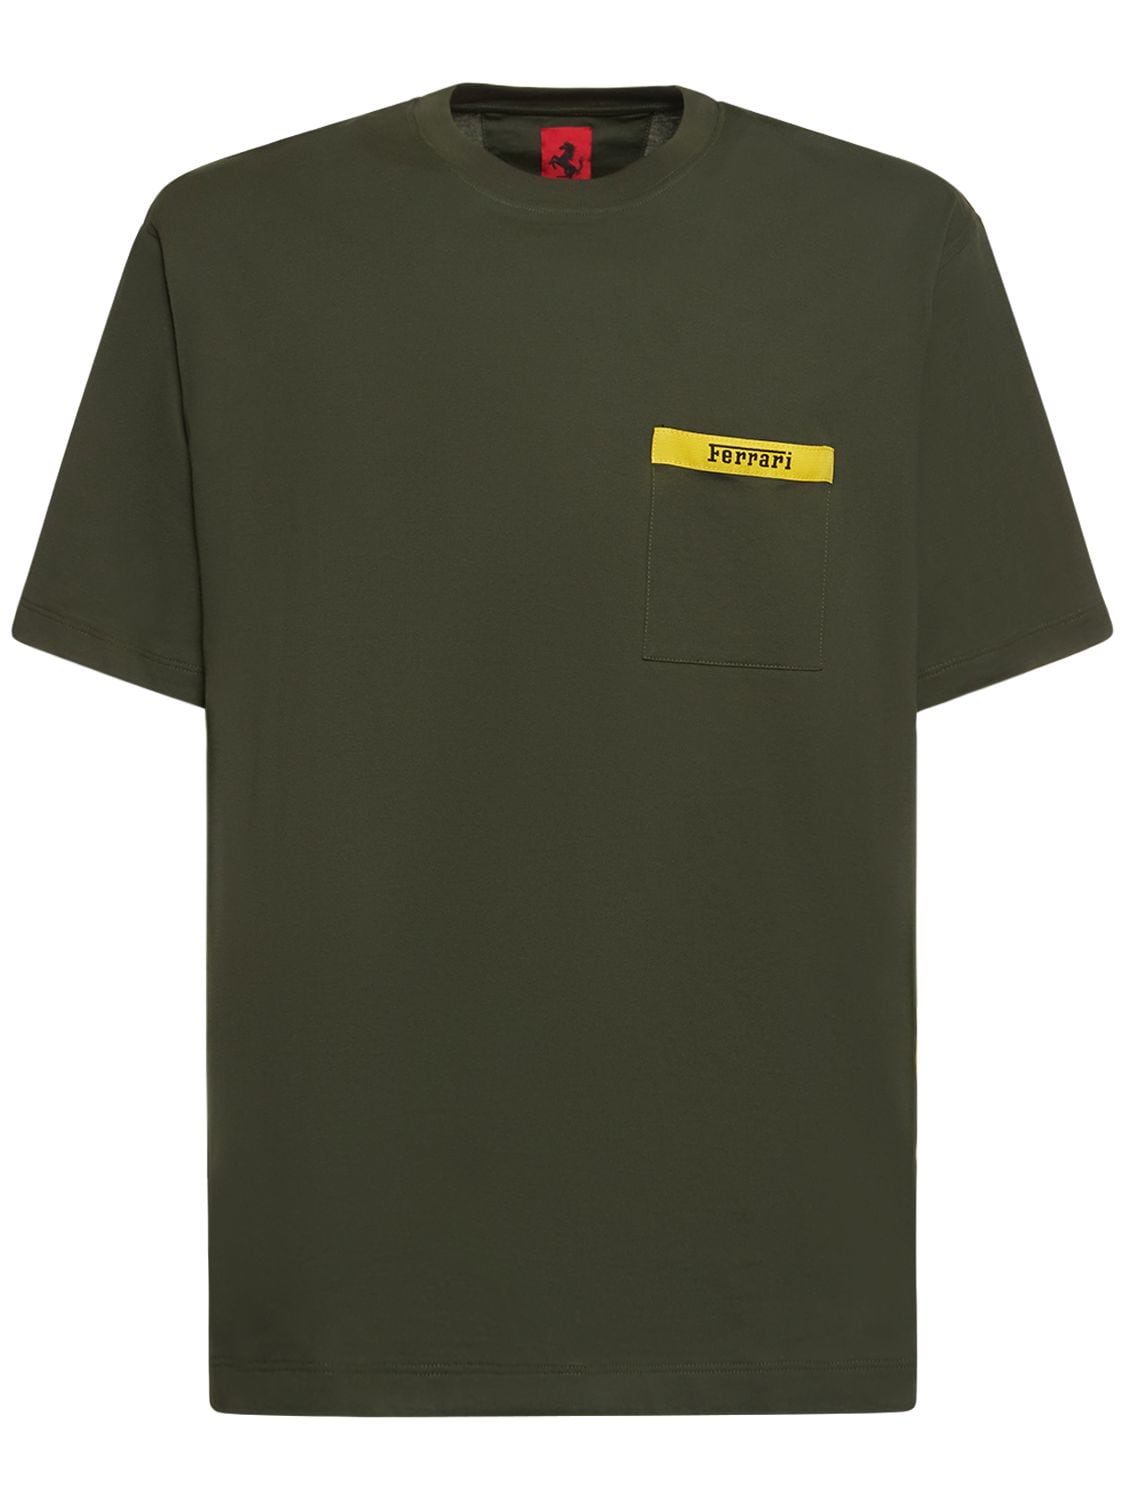 FERRARI S/s T-shirt W/ Pocket